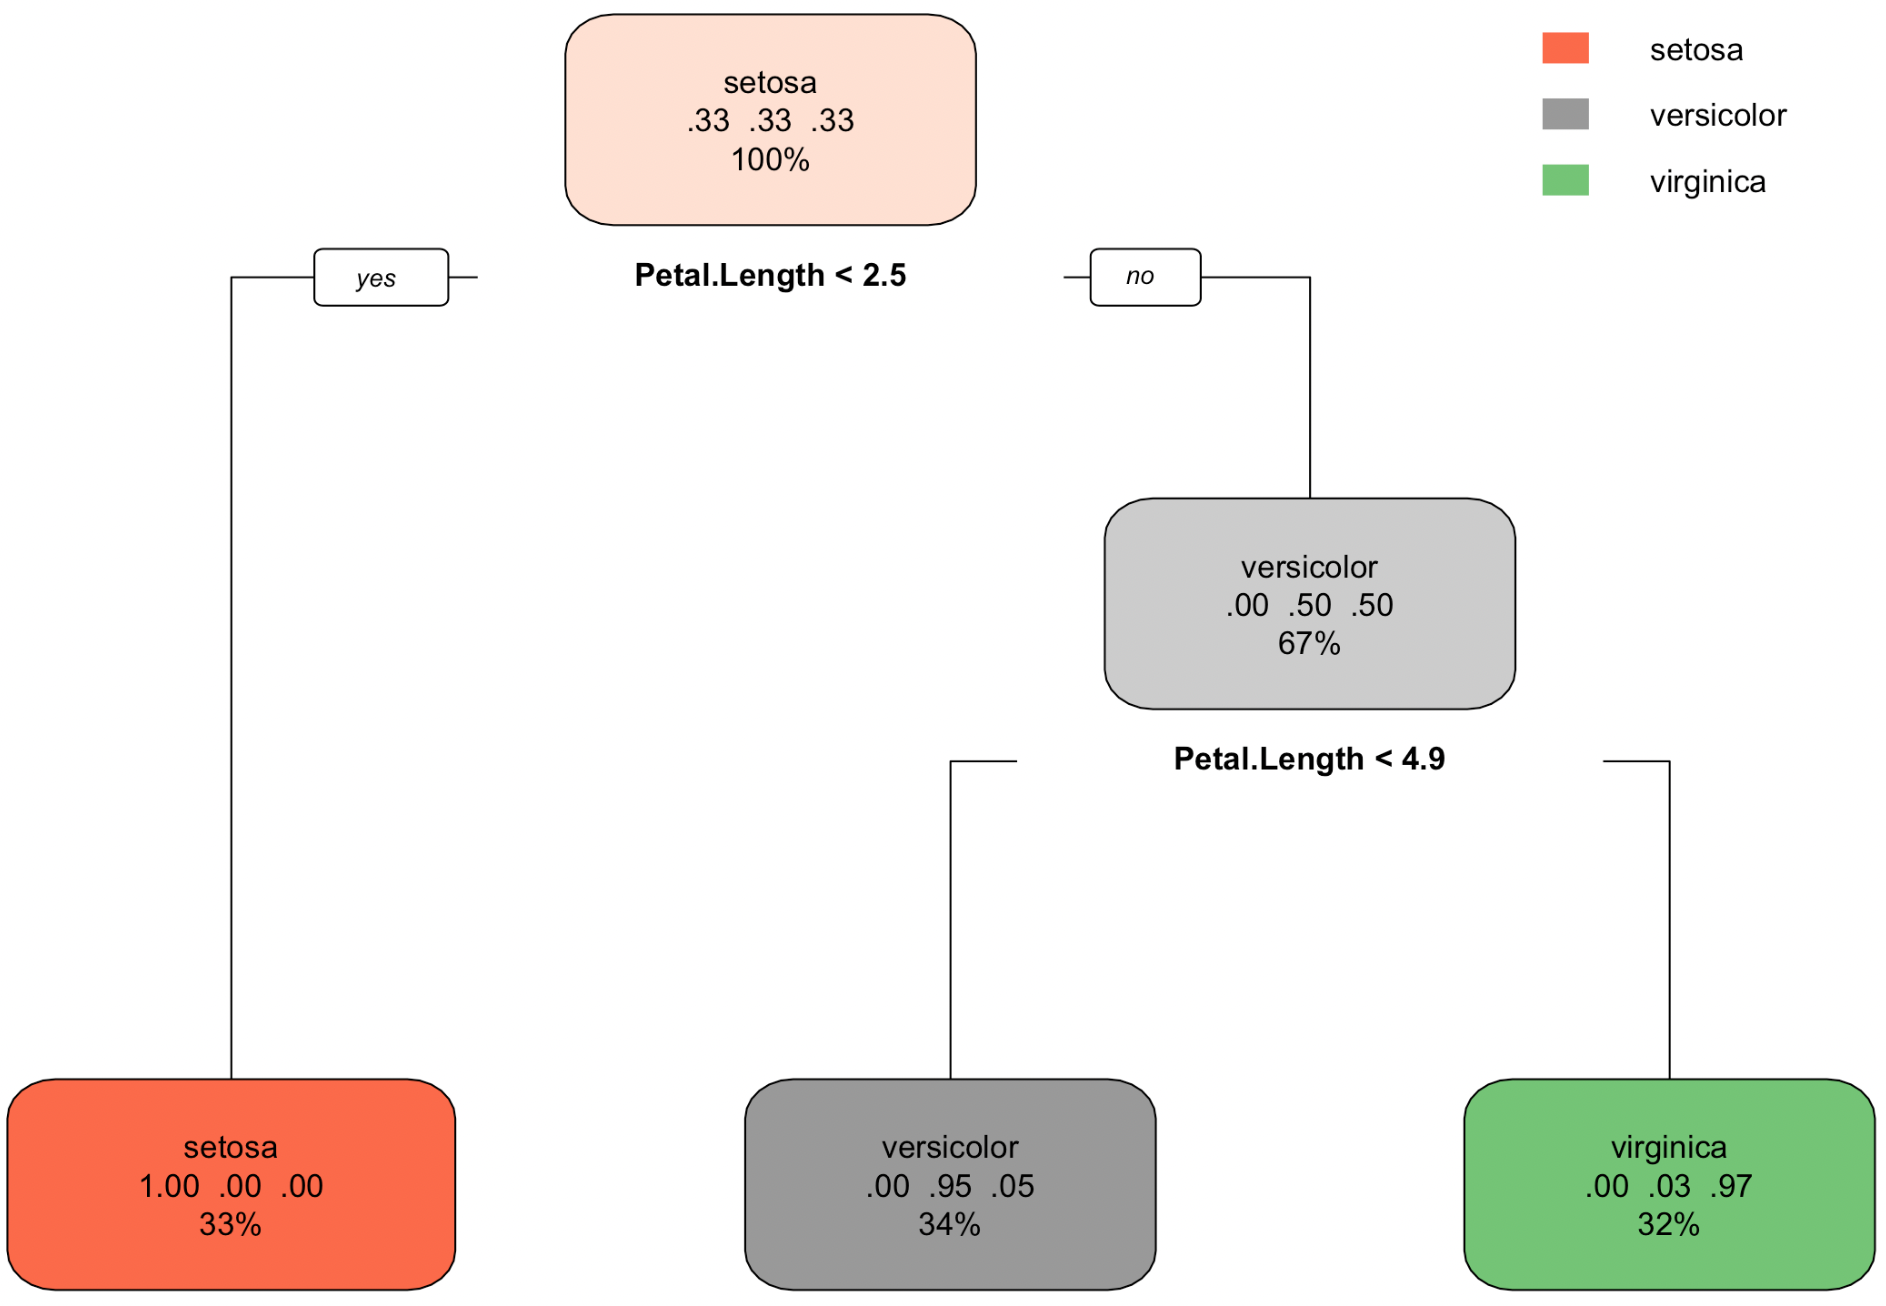 Image 4 - Visual representation of the decision tree